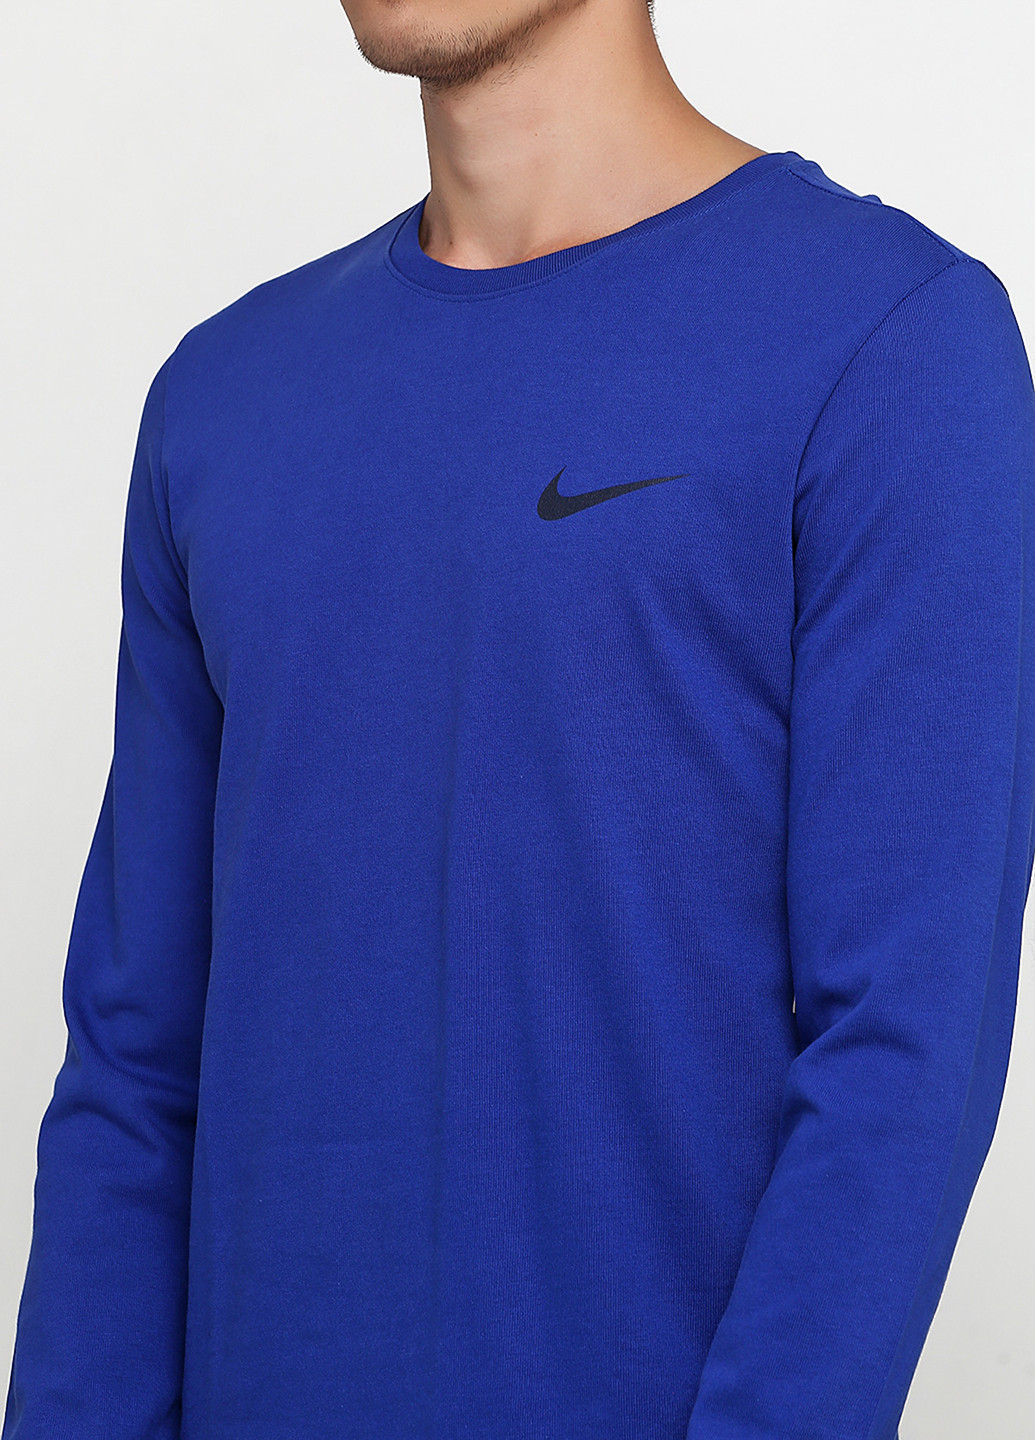 Свитшот Nike - Прямой крой синий спортивный трикотаж, хлопок - (190936216)